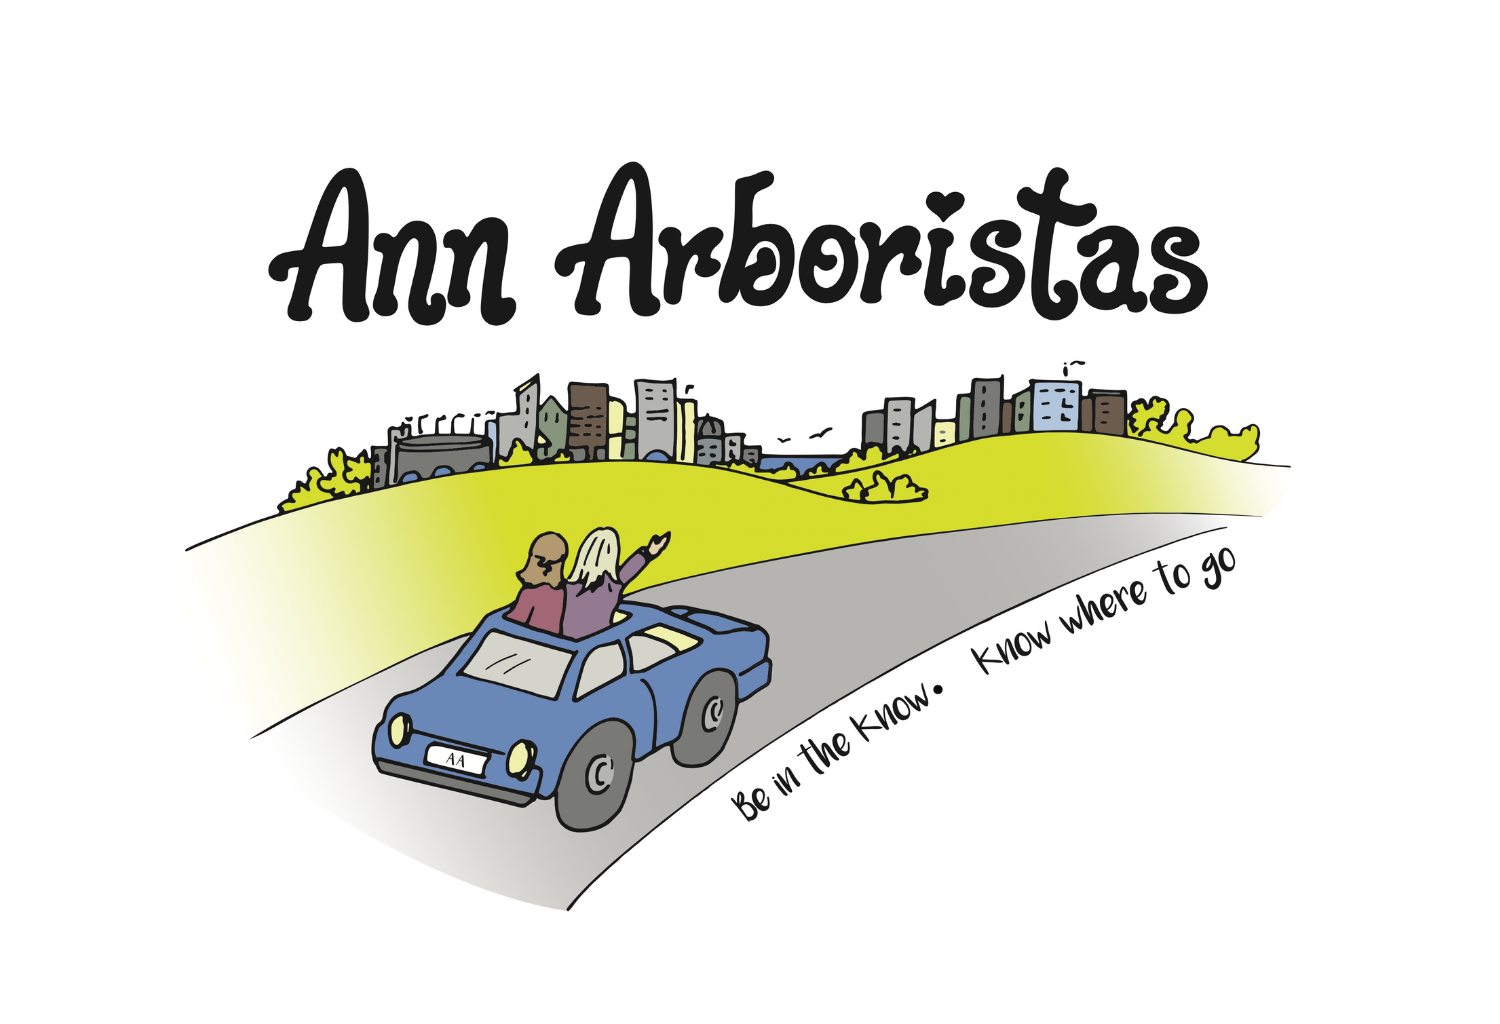 Ann Arboristas